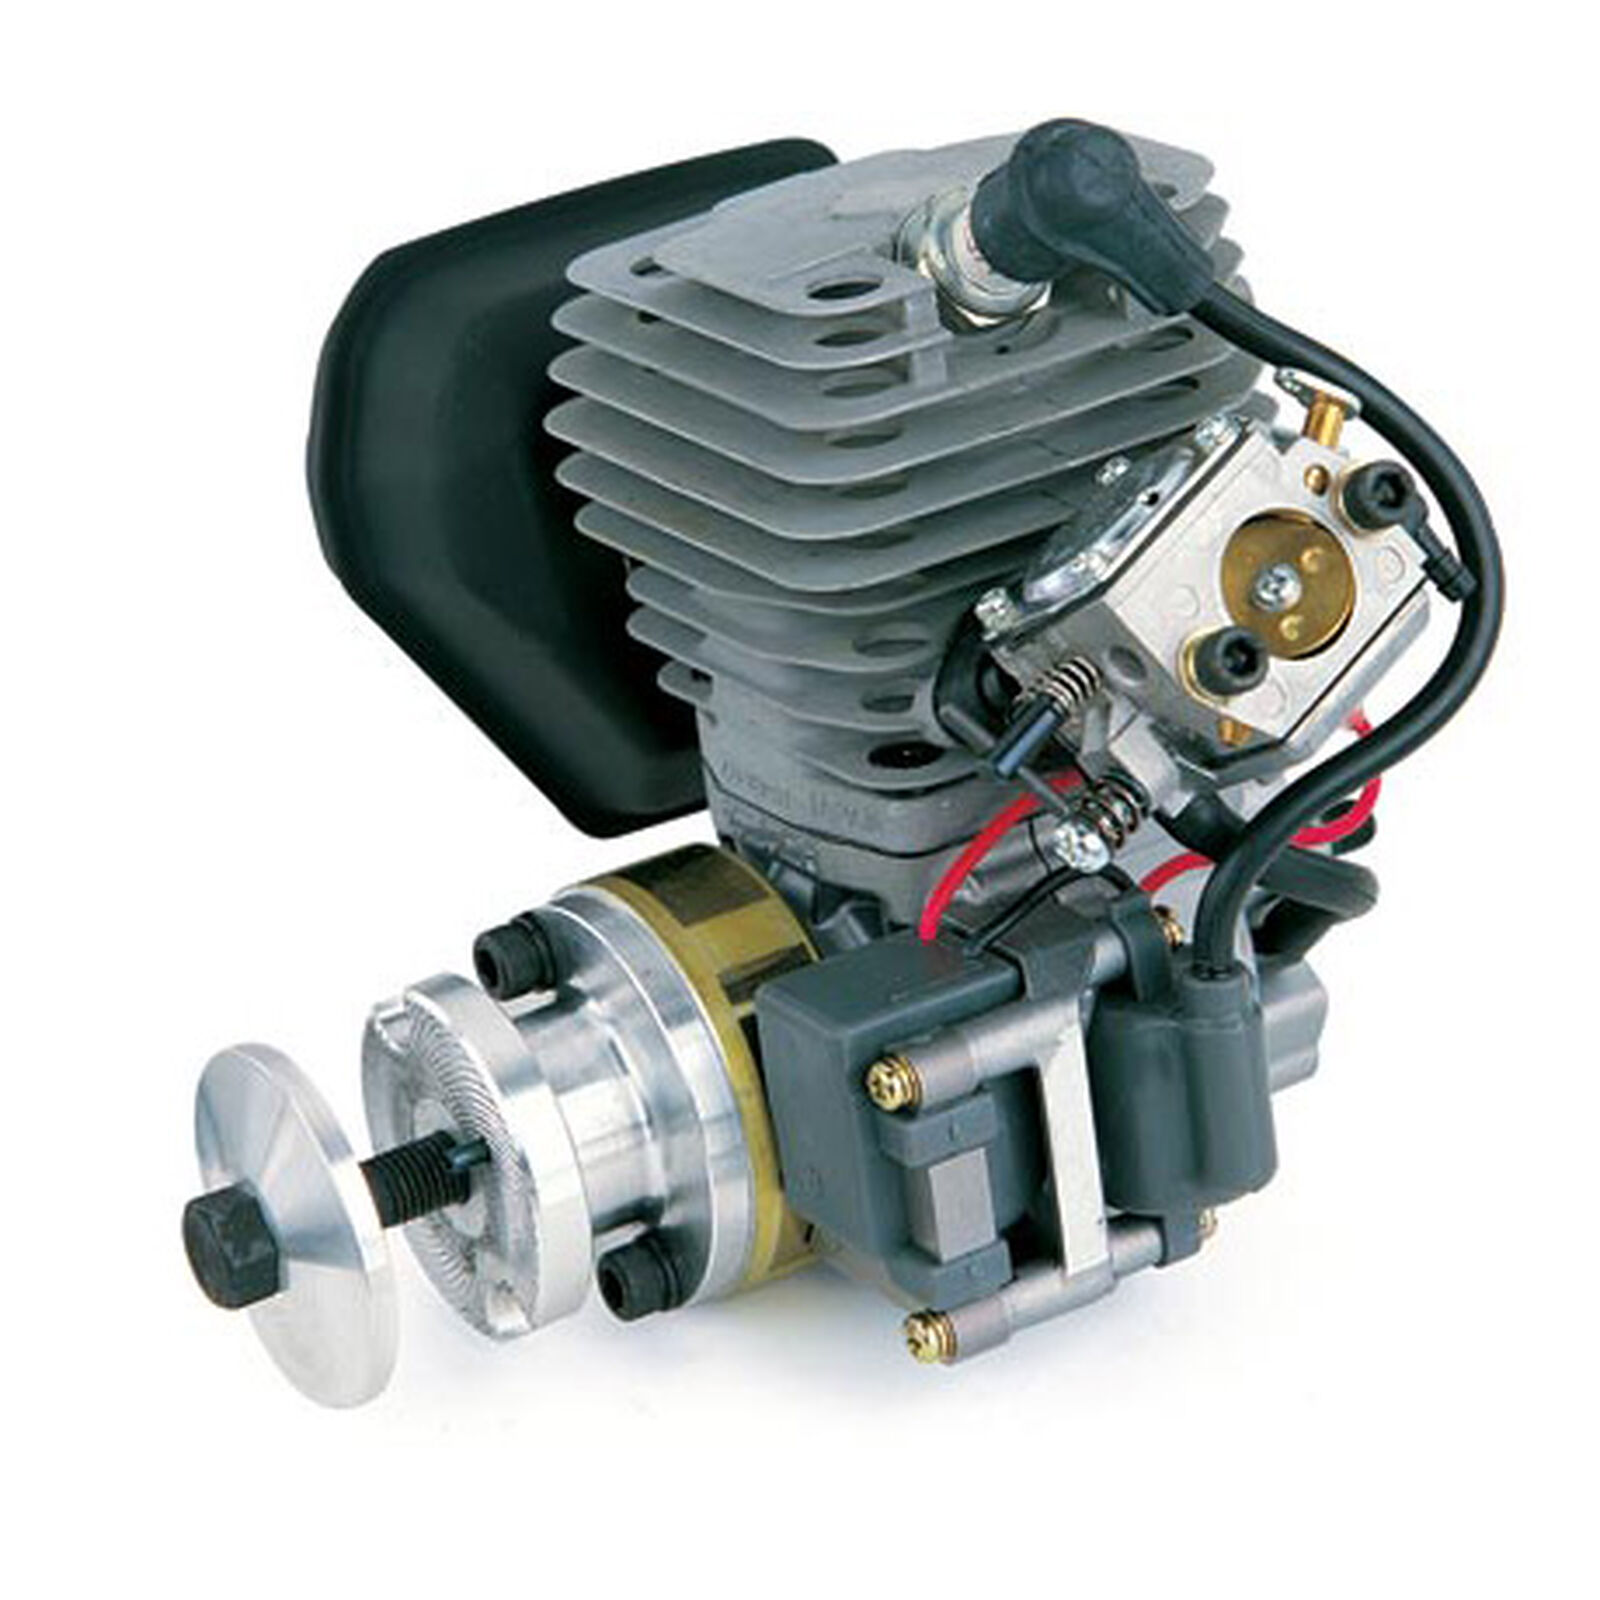 G45 Engine (2.8 cu in)